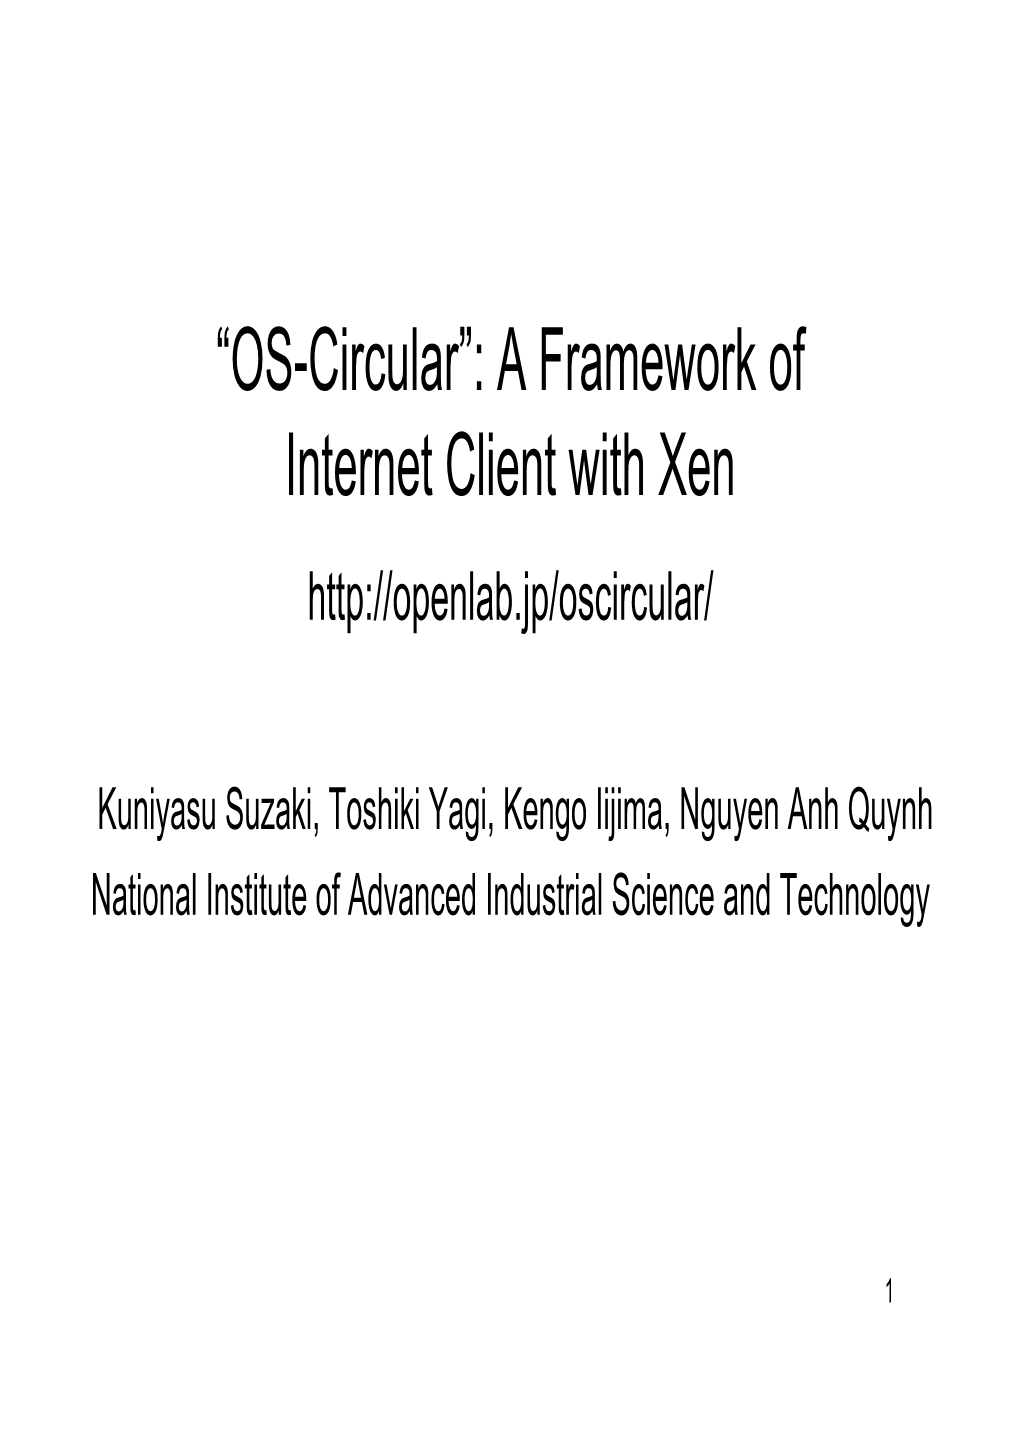 “OS-Circular”: a Framework of Internet Client with Xen